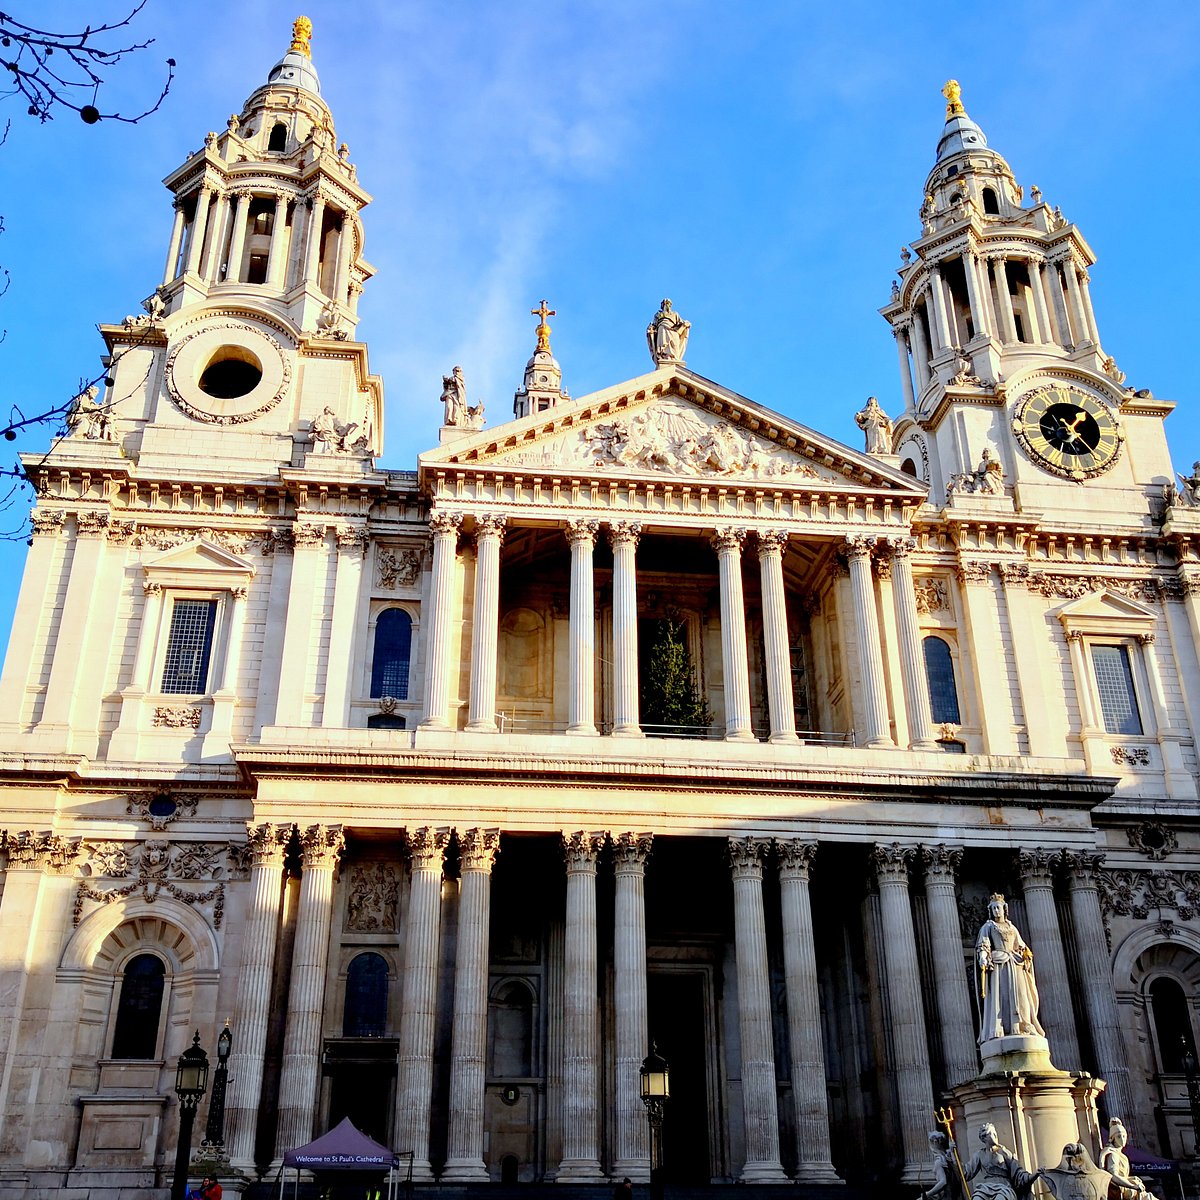 St. Paul's Cathedral (Londra) - Tripadvisor